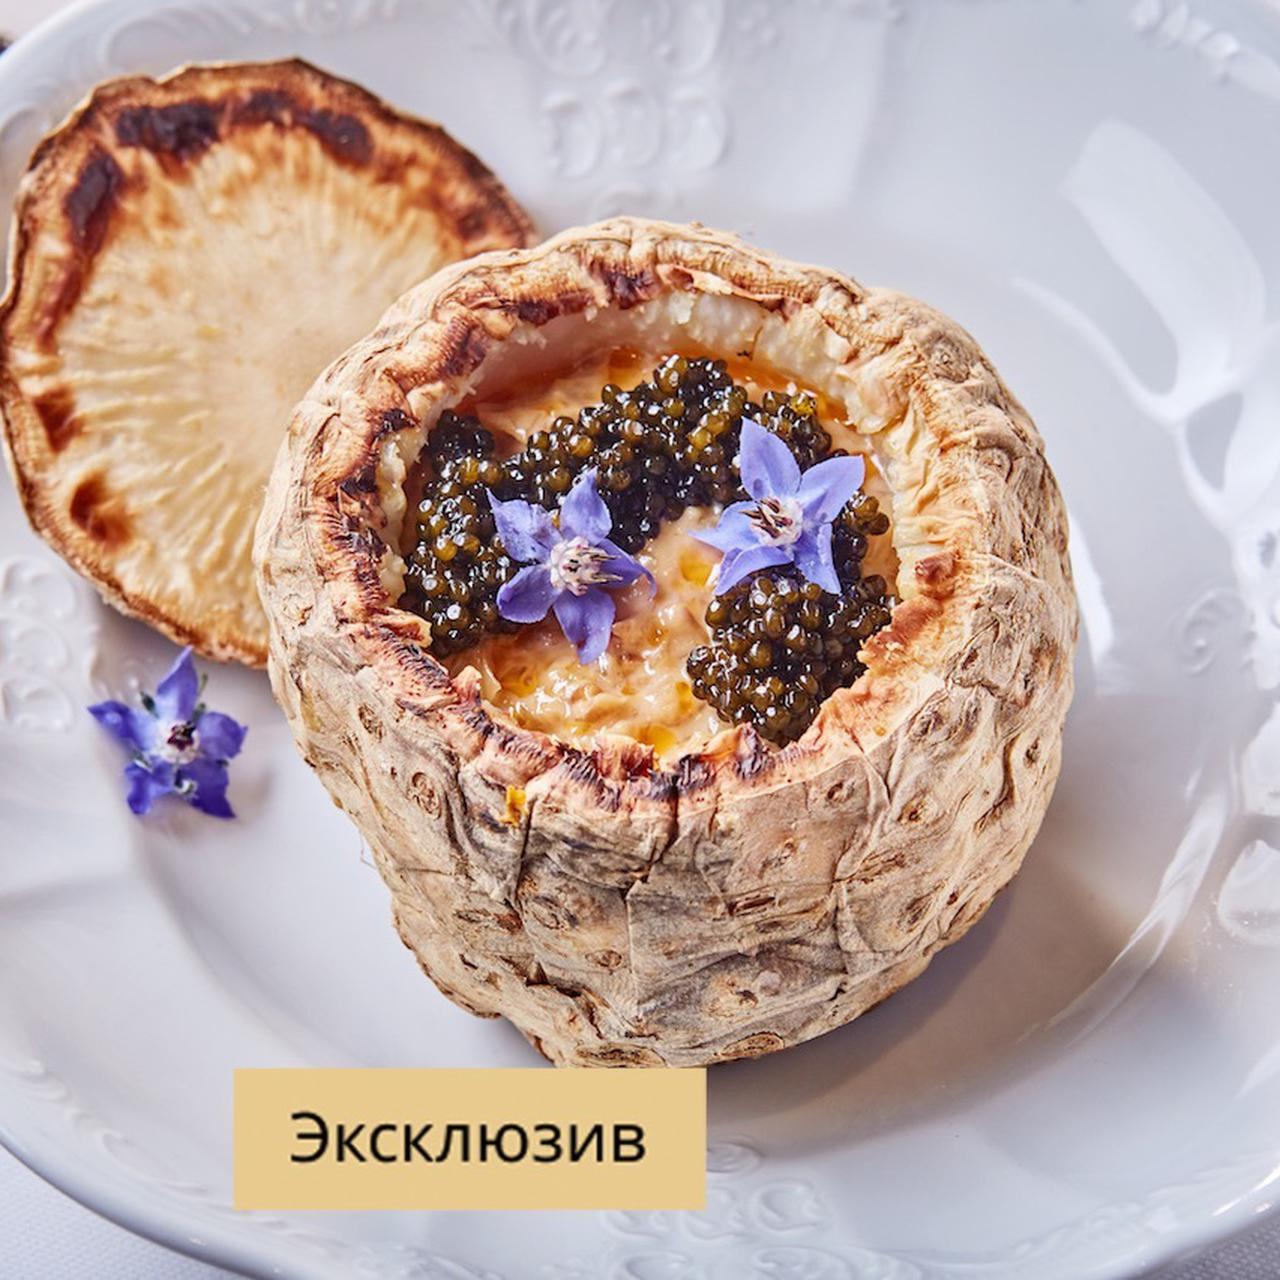 Лучшие блюда от шефов на malino-v.ru | malino-v.ru